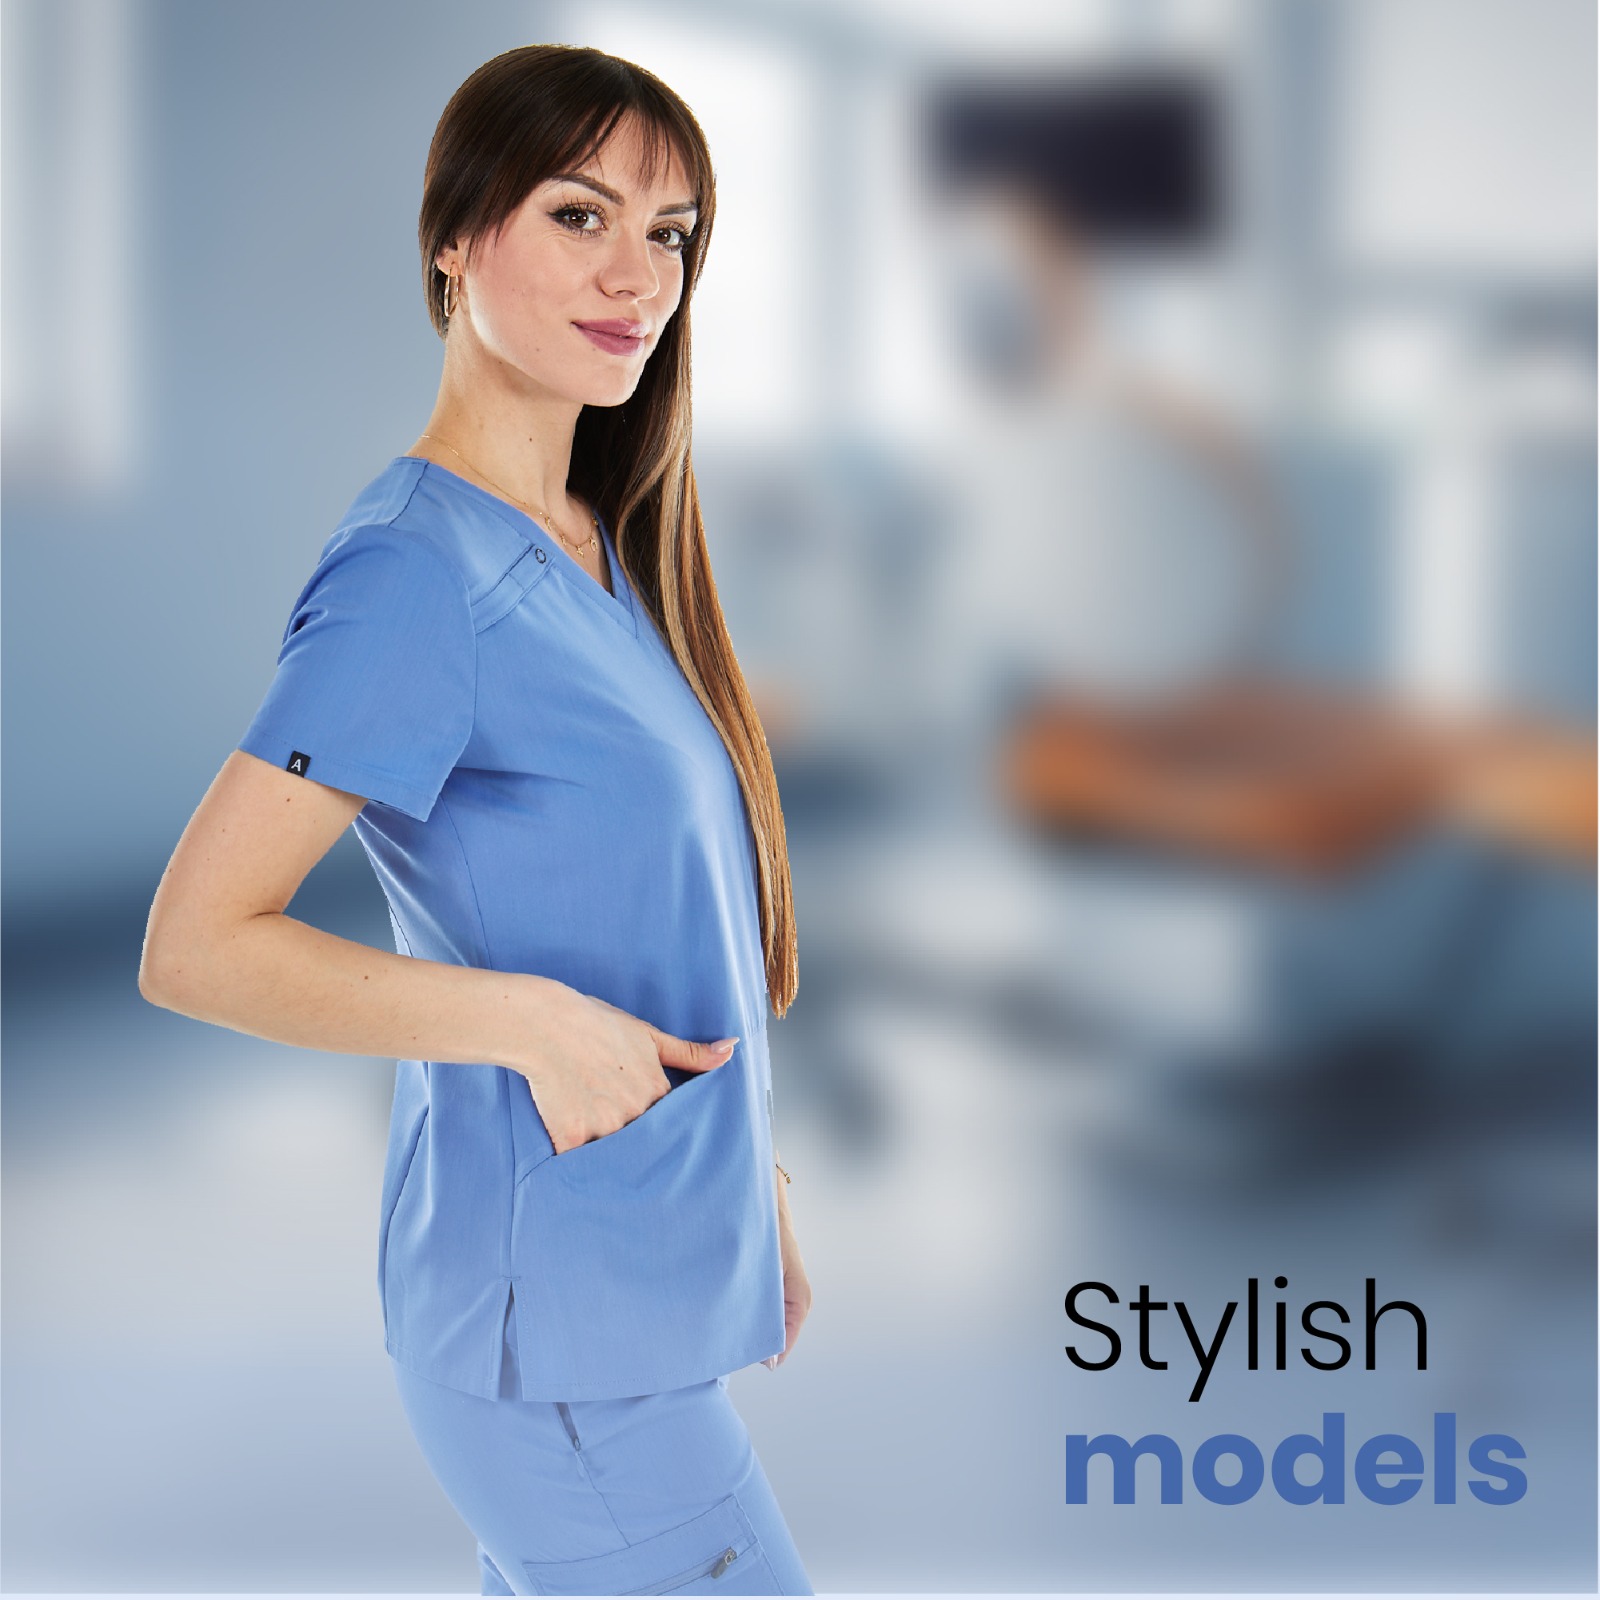 alamat scrubs stylish models